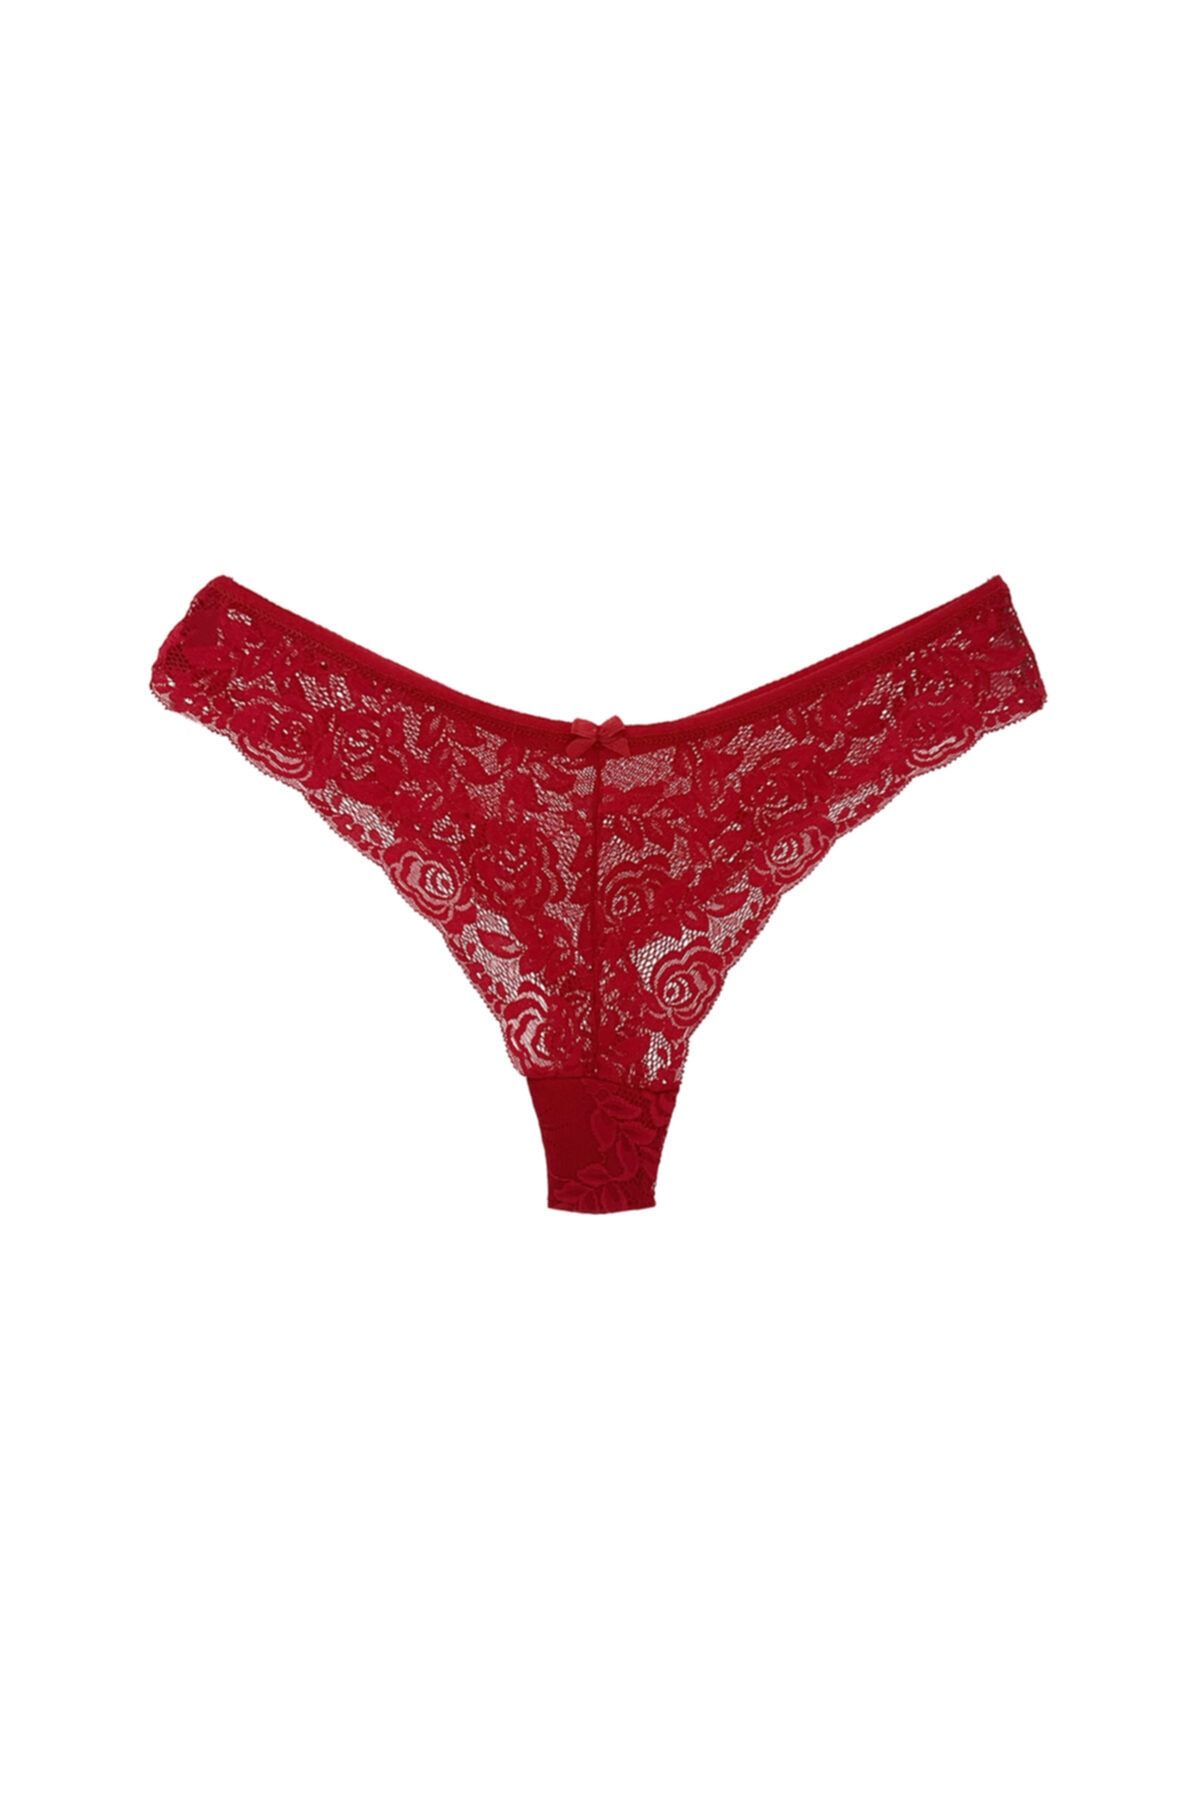 HNX 3-Piece Lace String Thong Panties